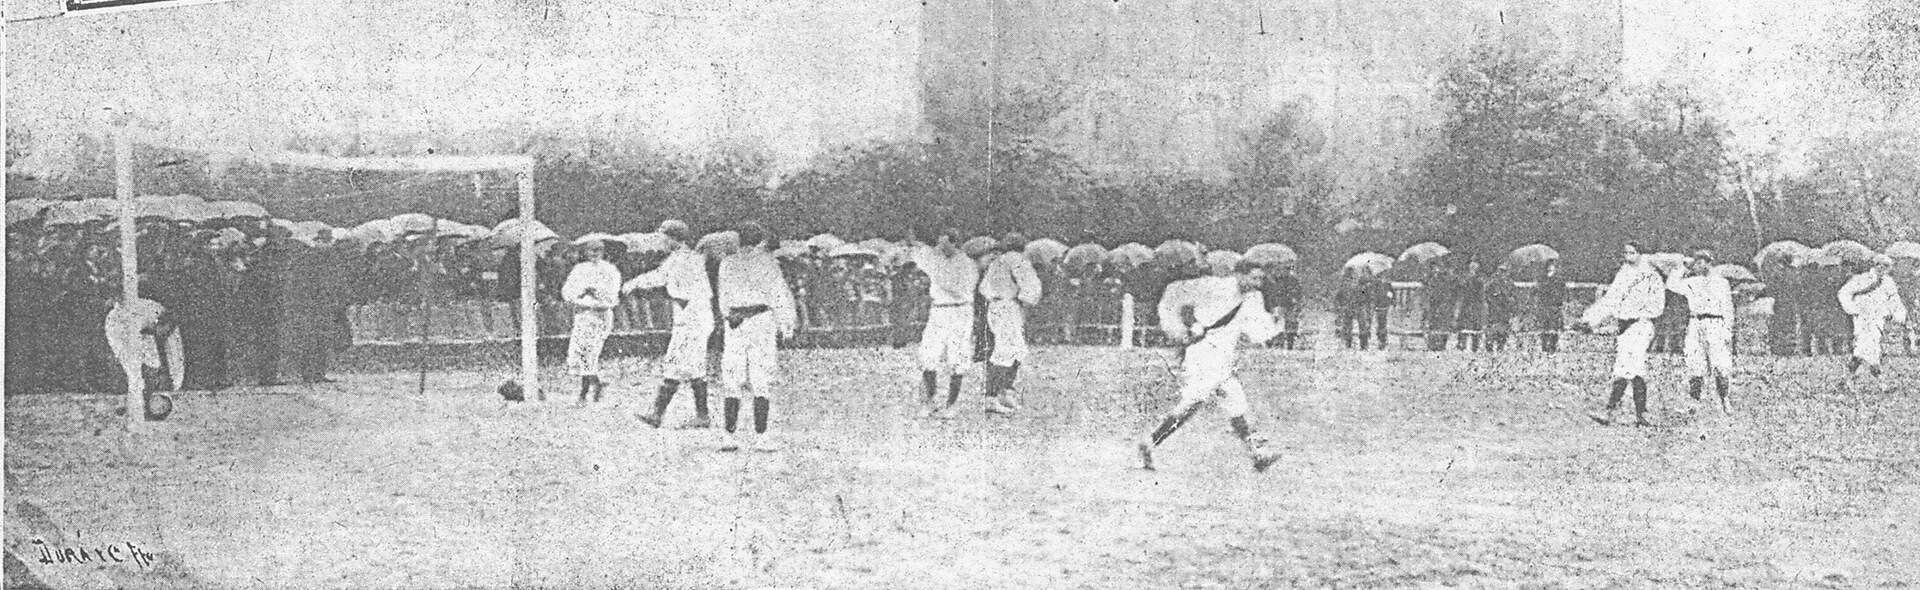 1906 Copa contra Madrid